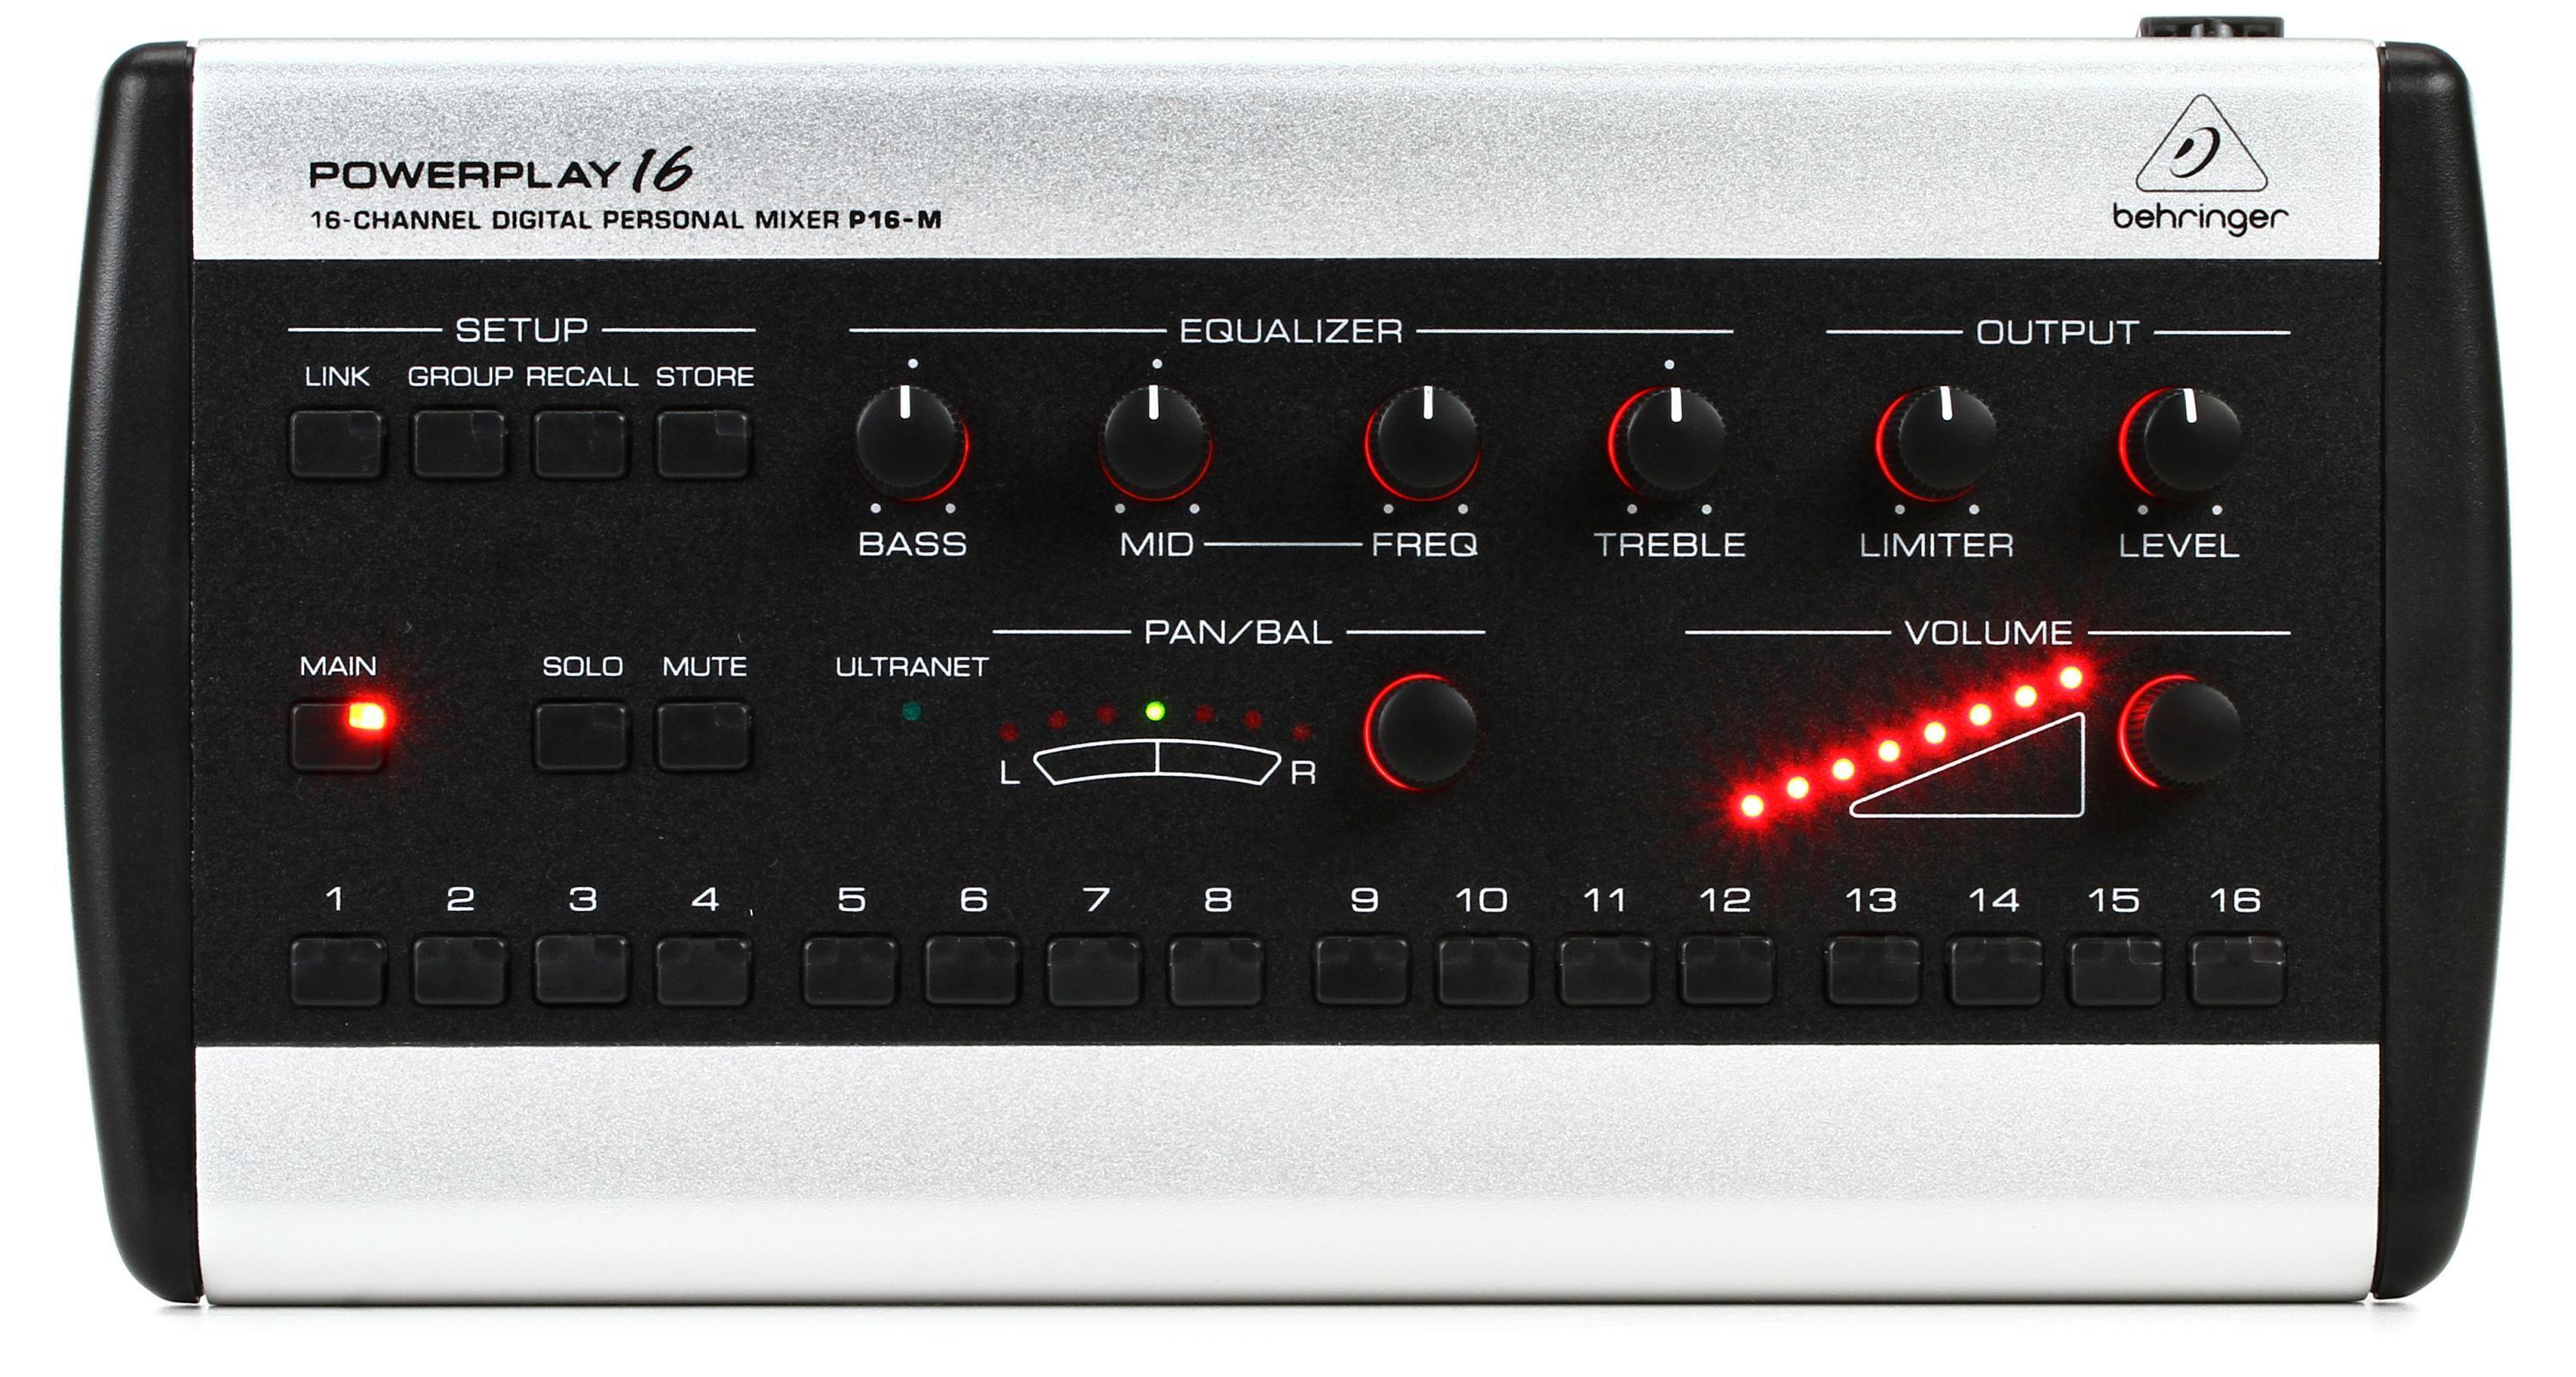 Bundled Item: Behringer Powerplay P16-M 16-channel Digital Personal Mixer